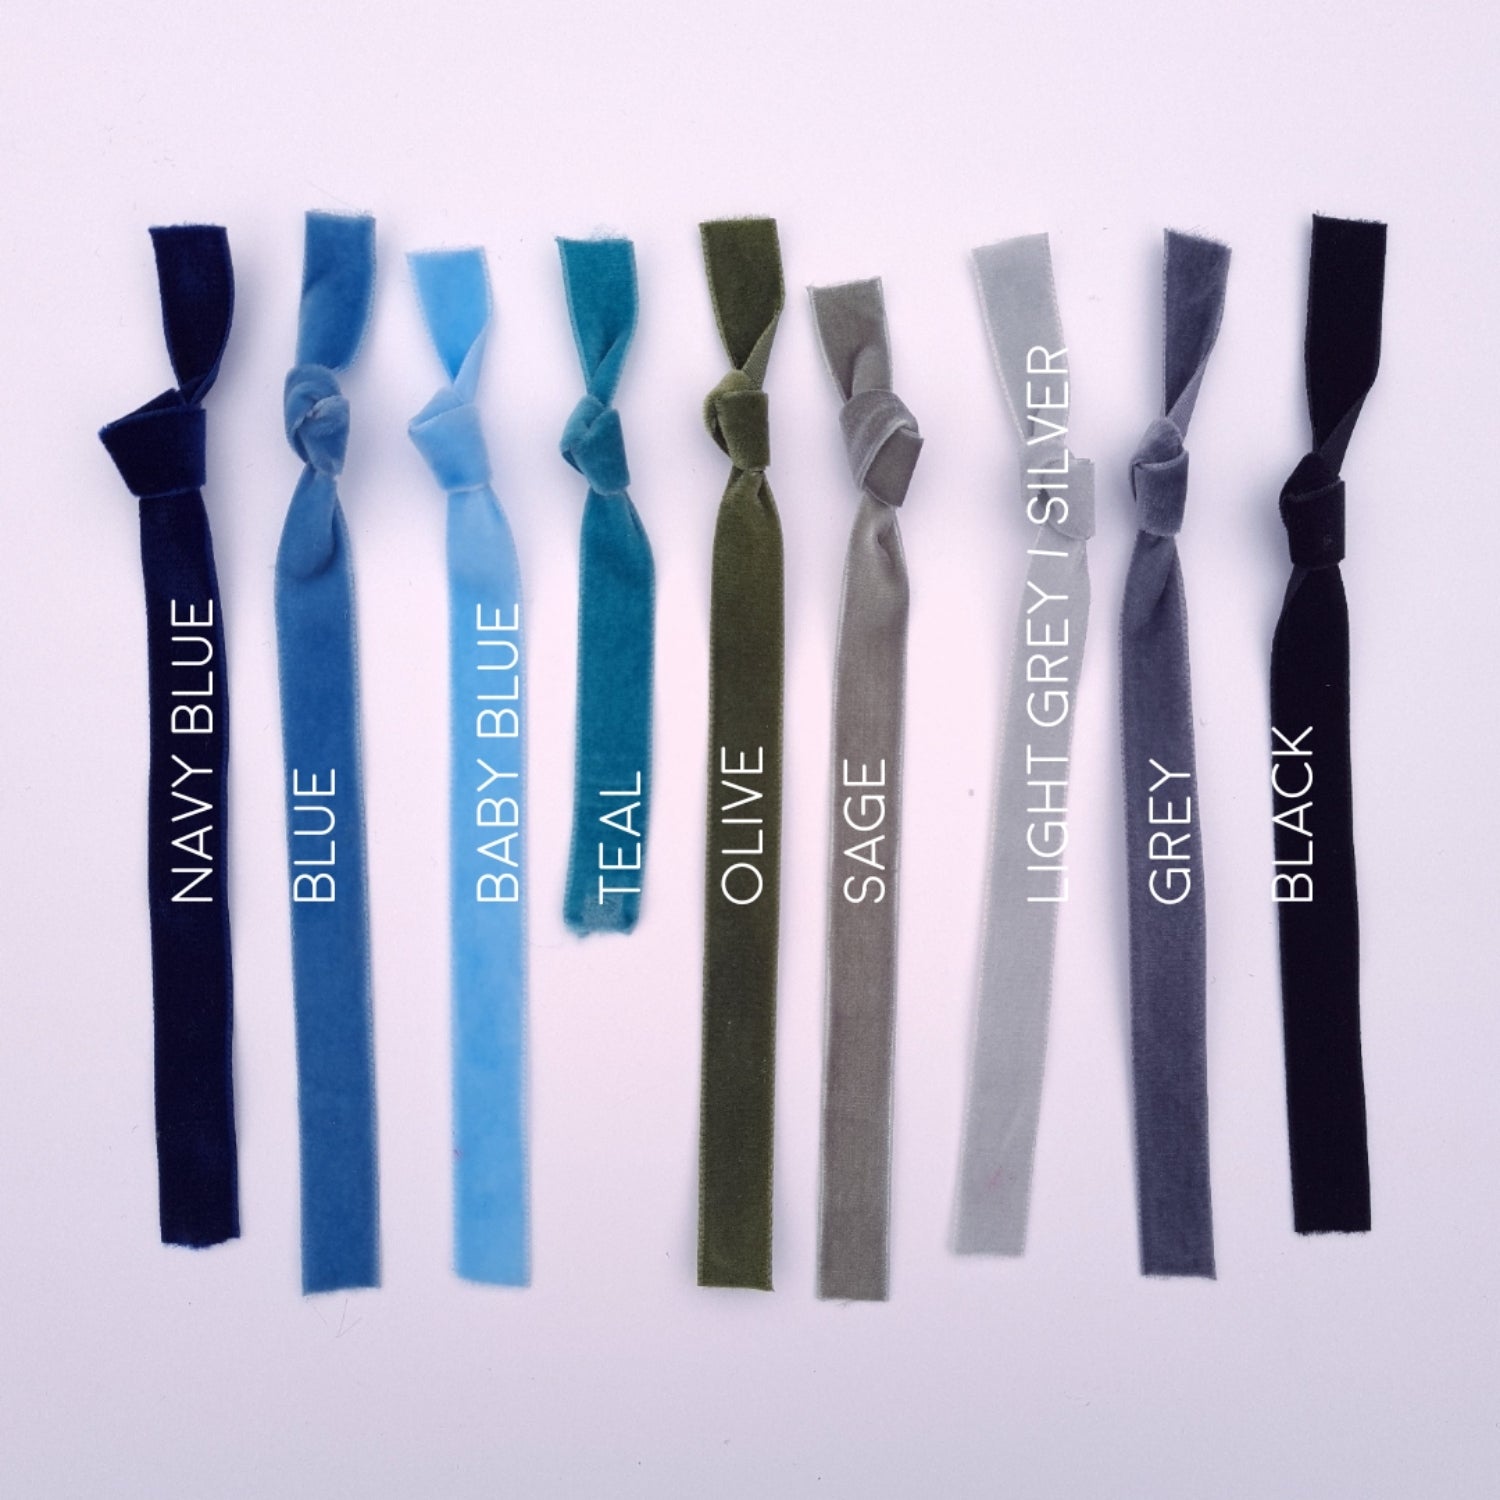 Velvet ribbons in navy blue, blue, baby blue, teal, olive, sage, light grey or silver, grey and black